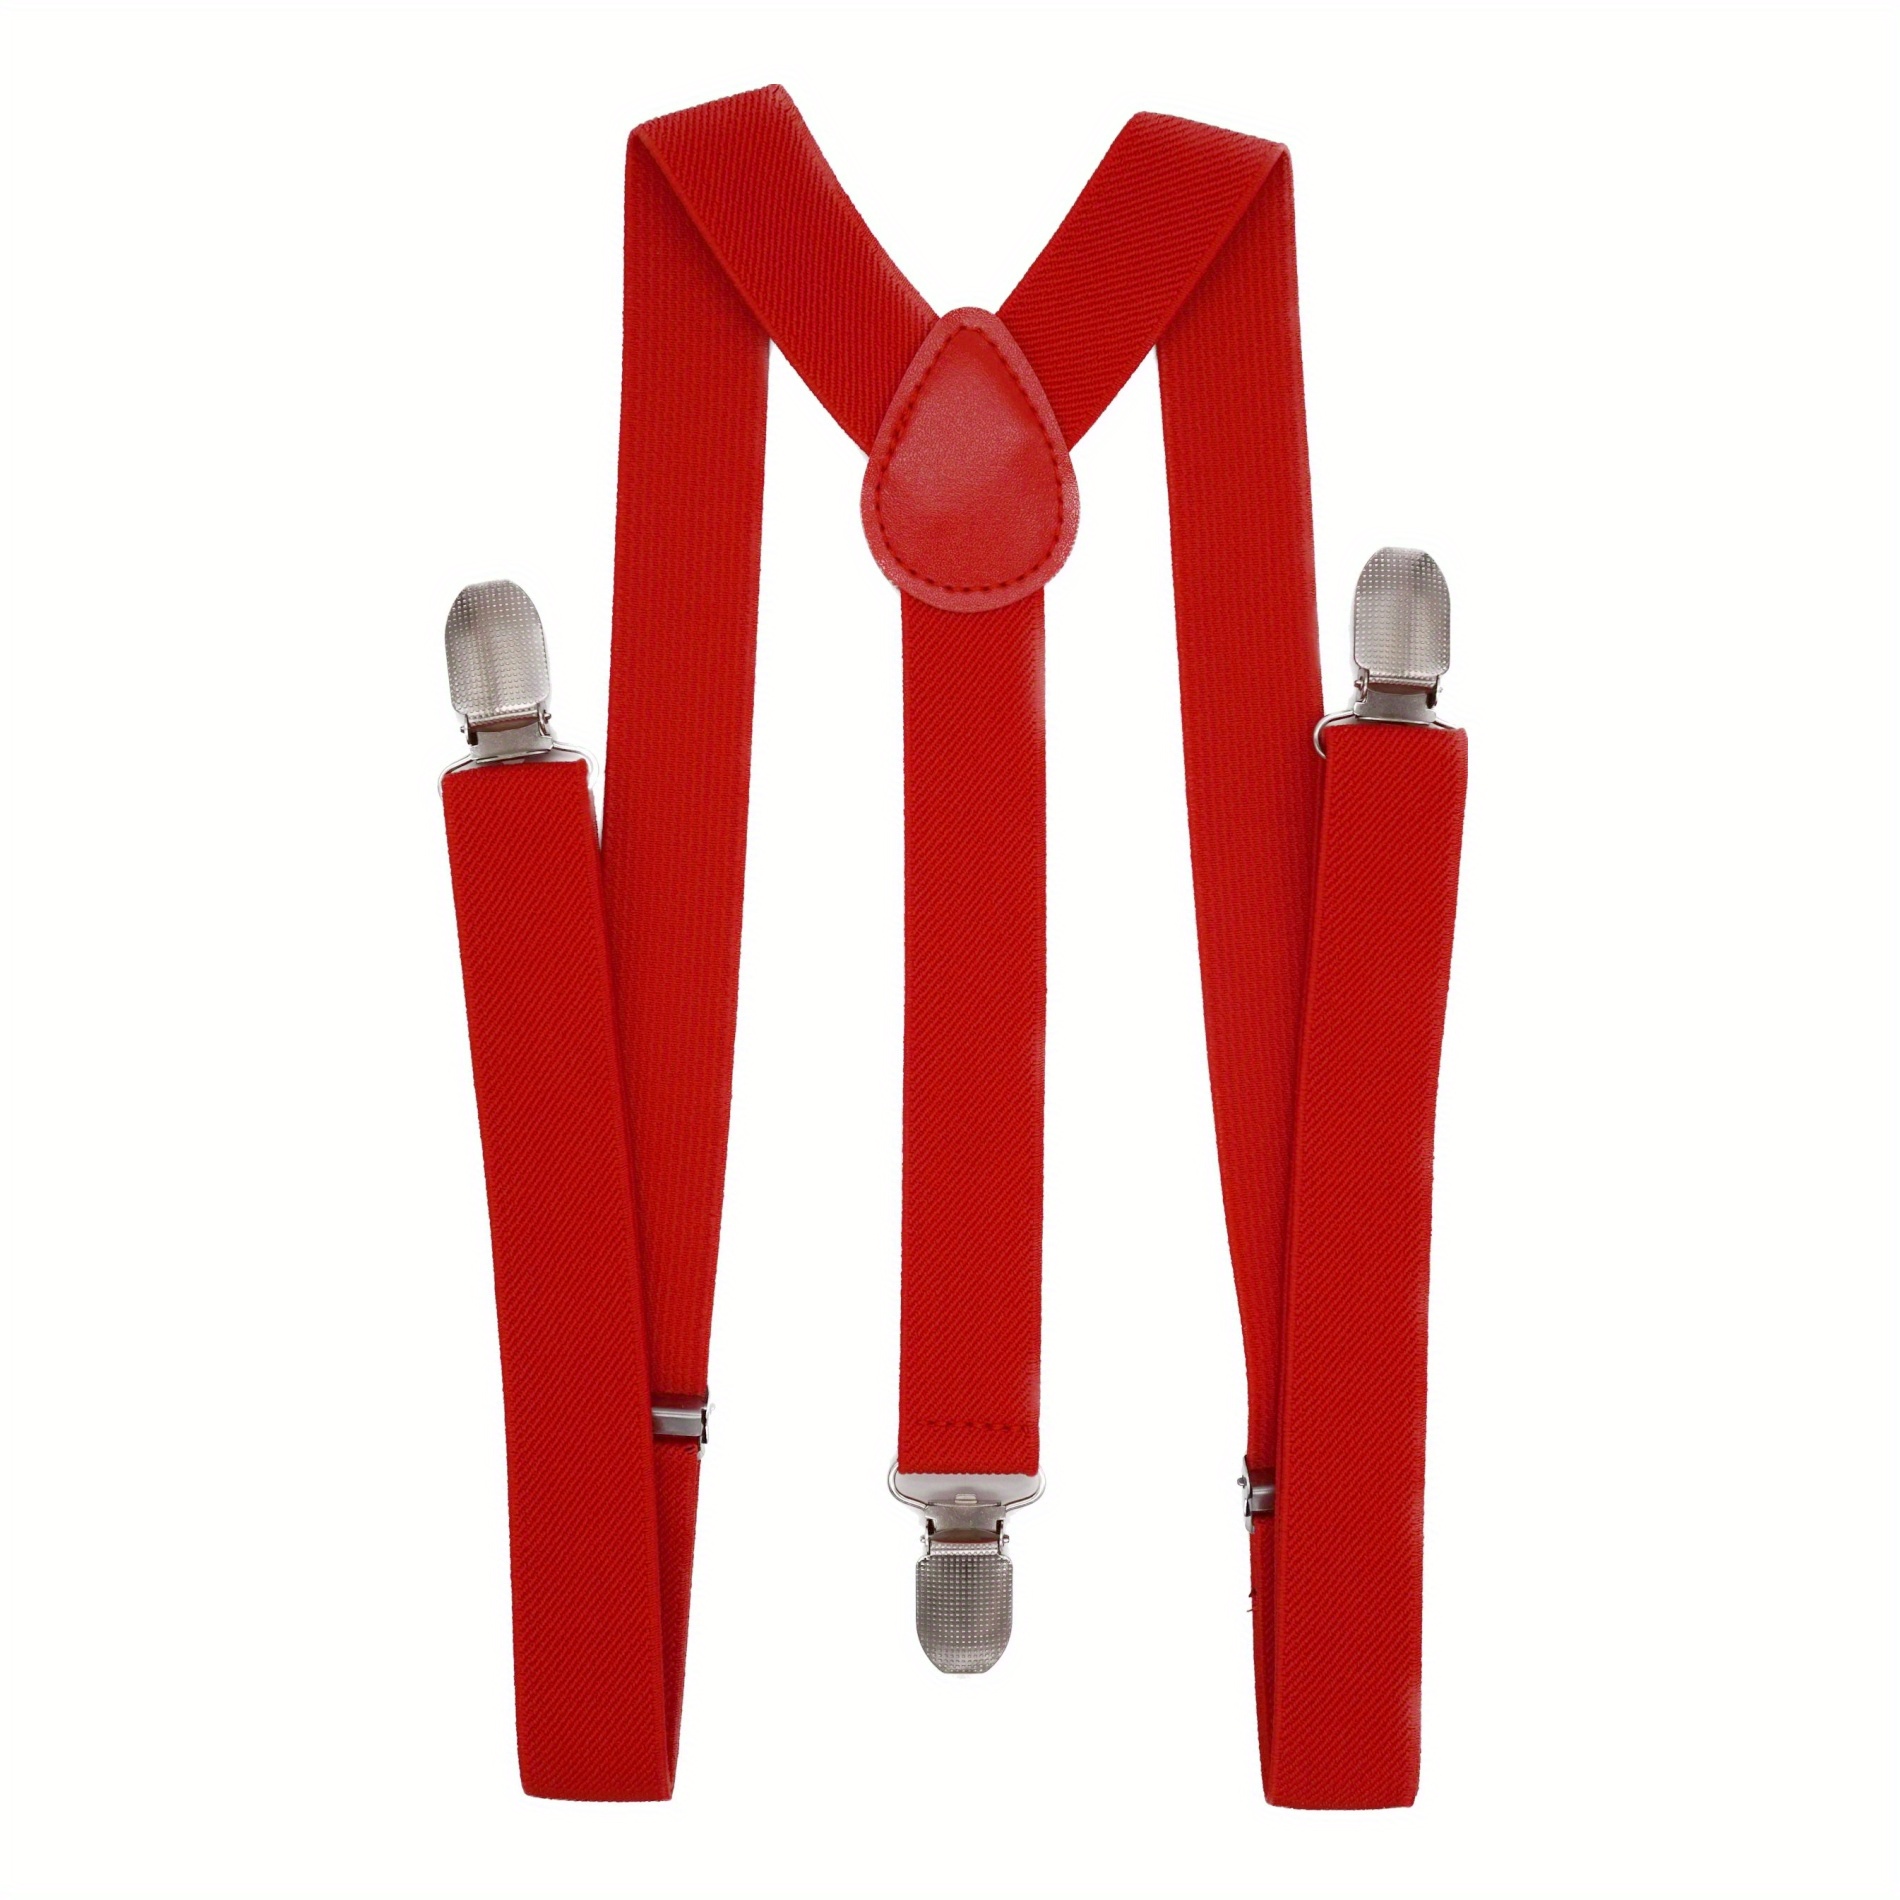 Buy MENDENG Suspenders for Men Heavy Duty Swivel Hooks Retro X-Back  Adjustable Brace, B/Red/Clips, One Size at